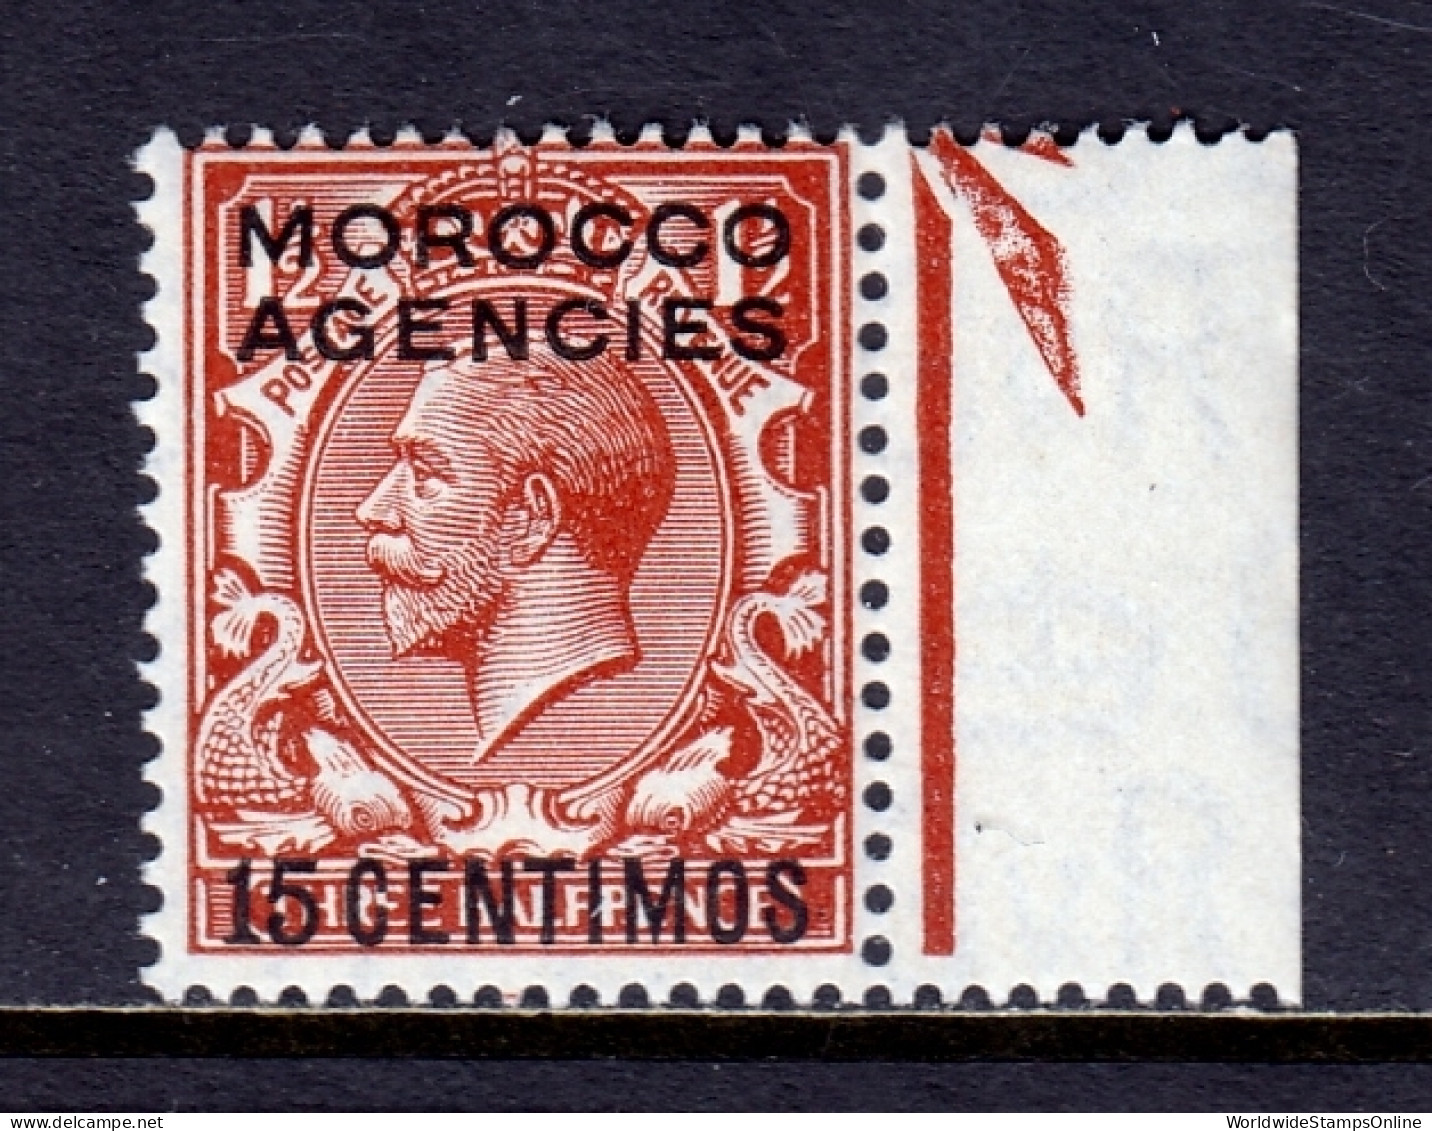 Morocco Agencies - Scott #60 - MH - SCV $8.50 - Morocco Agencies / Tangier (...-1958)